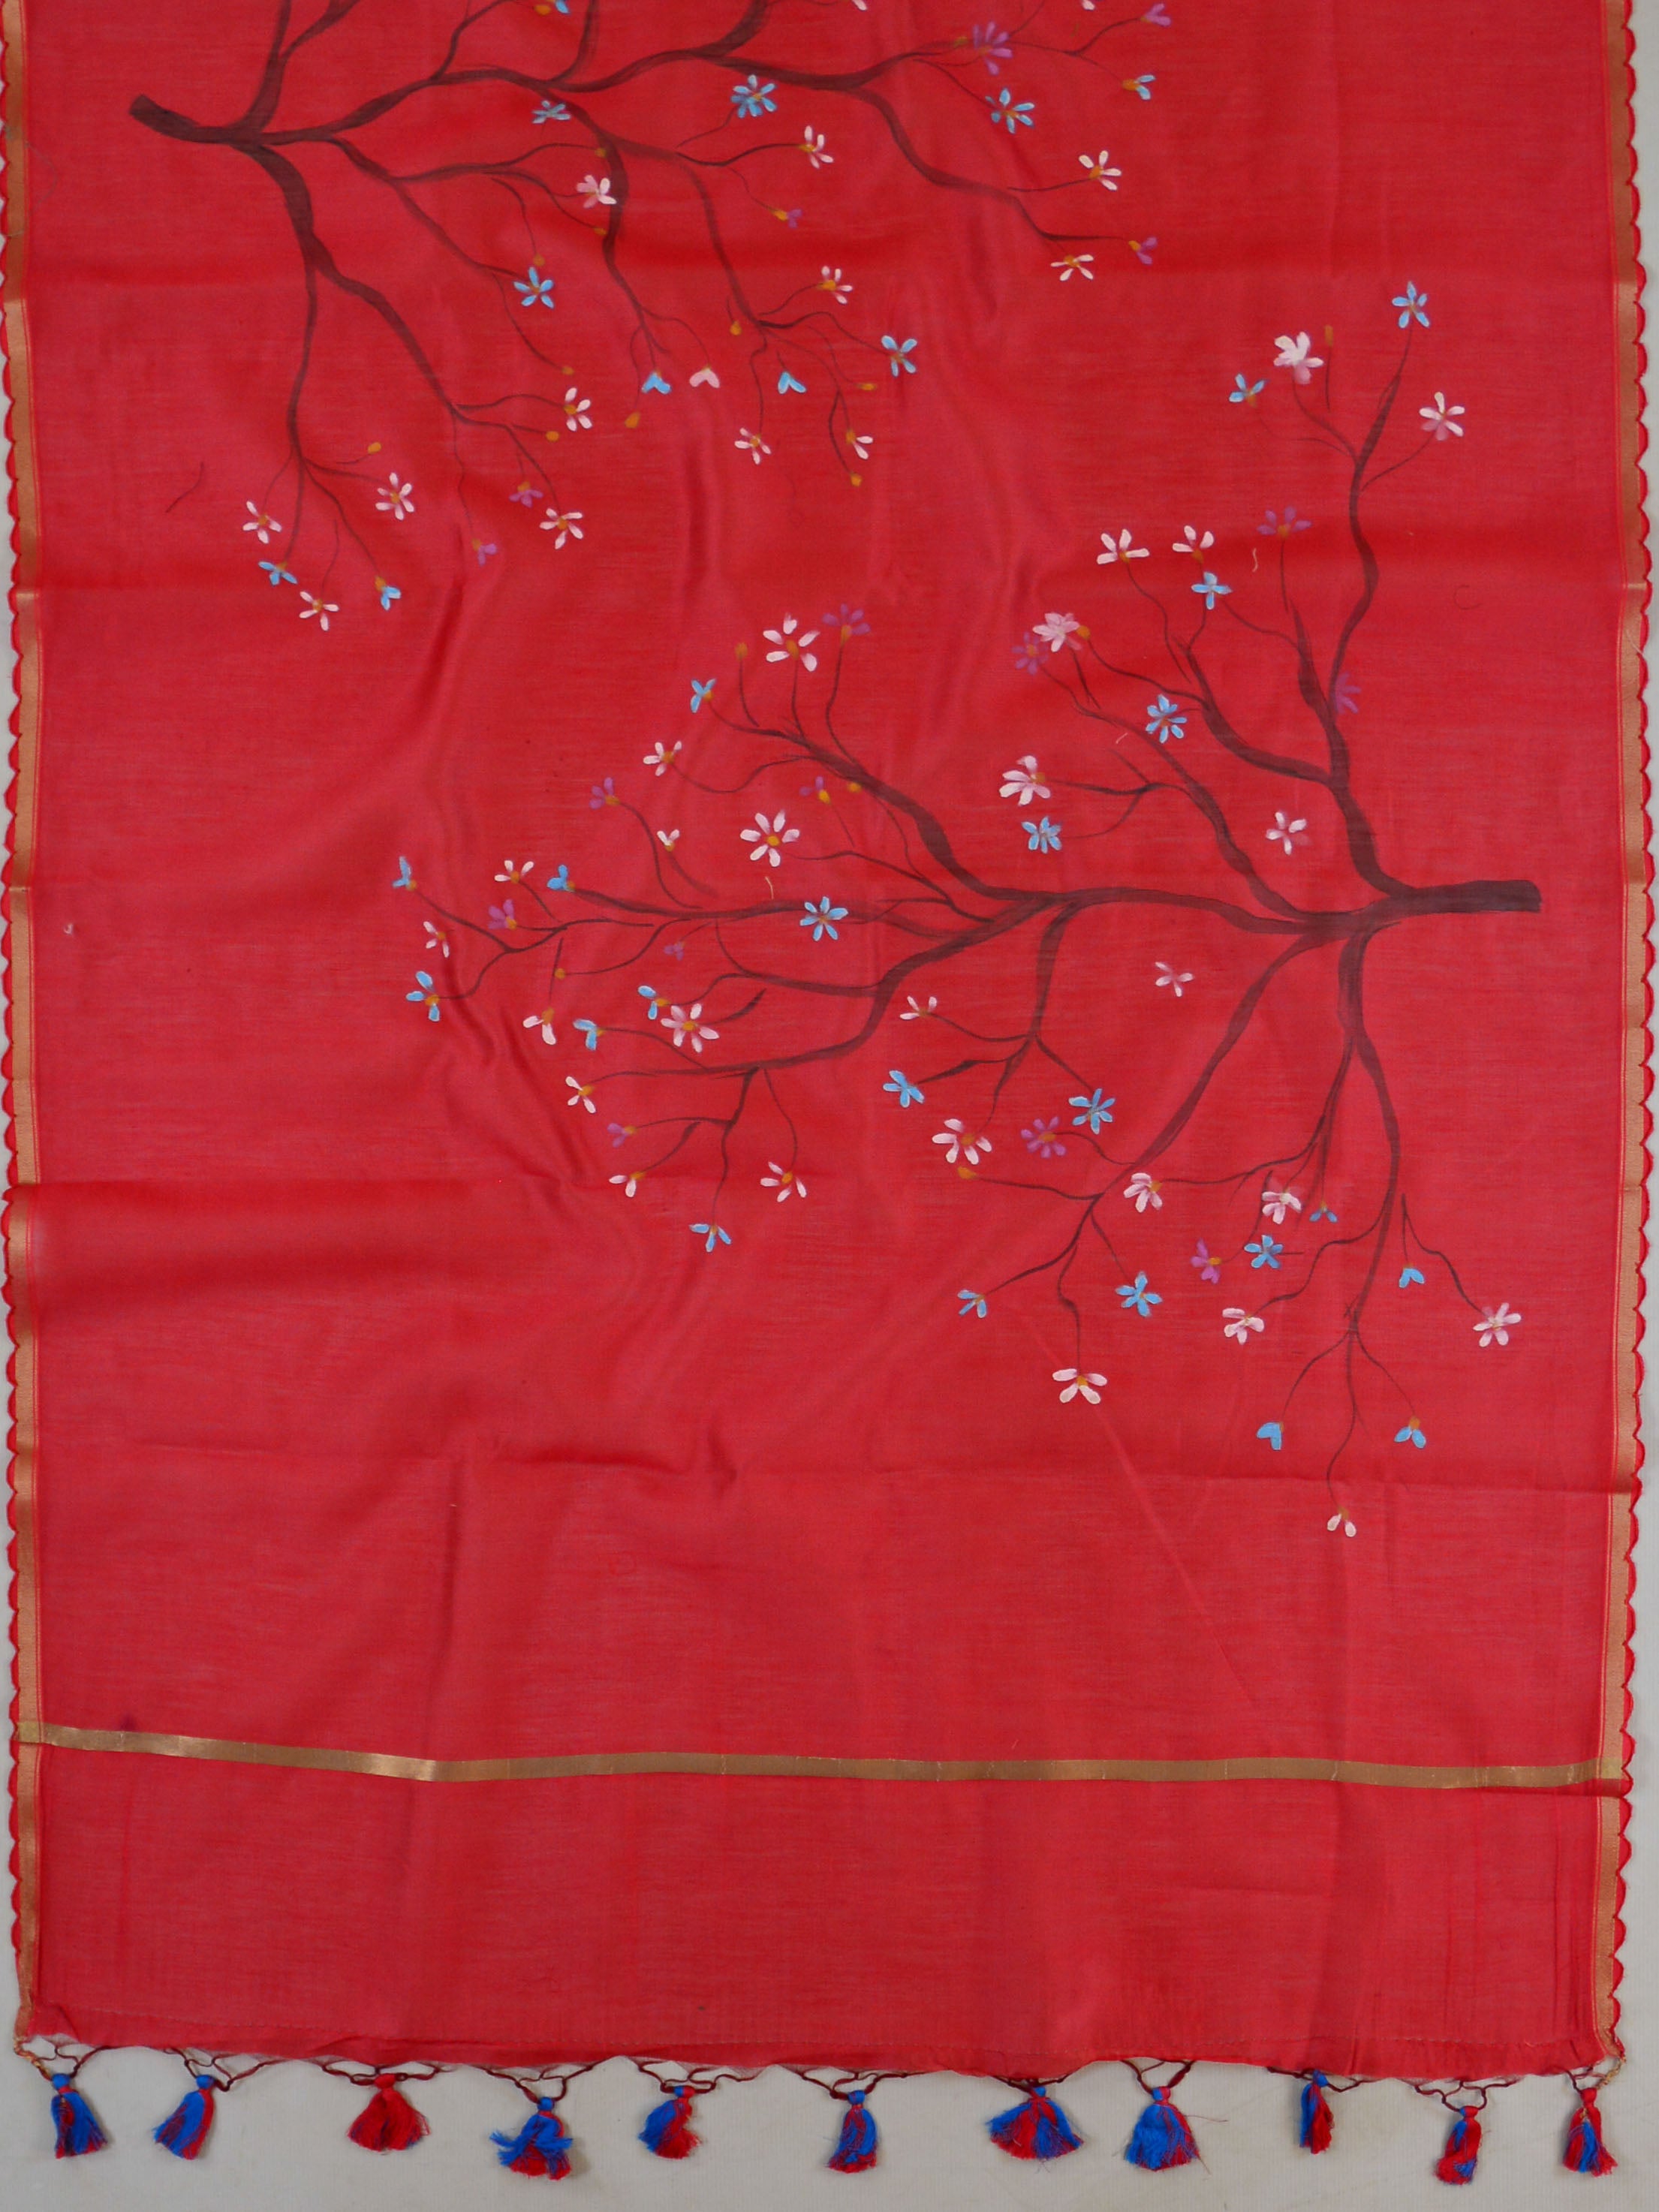 Banarasee Pure Handloom Chanderi Hand Painted Dupatta-Red